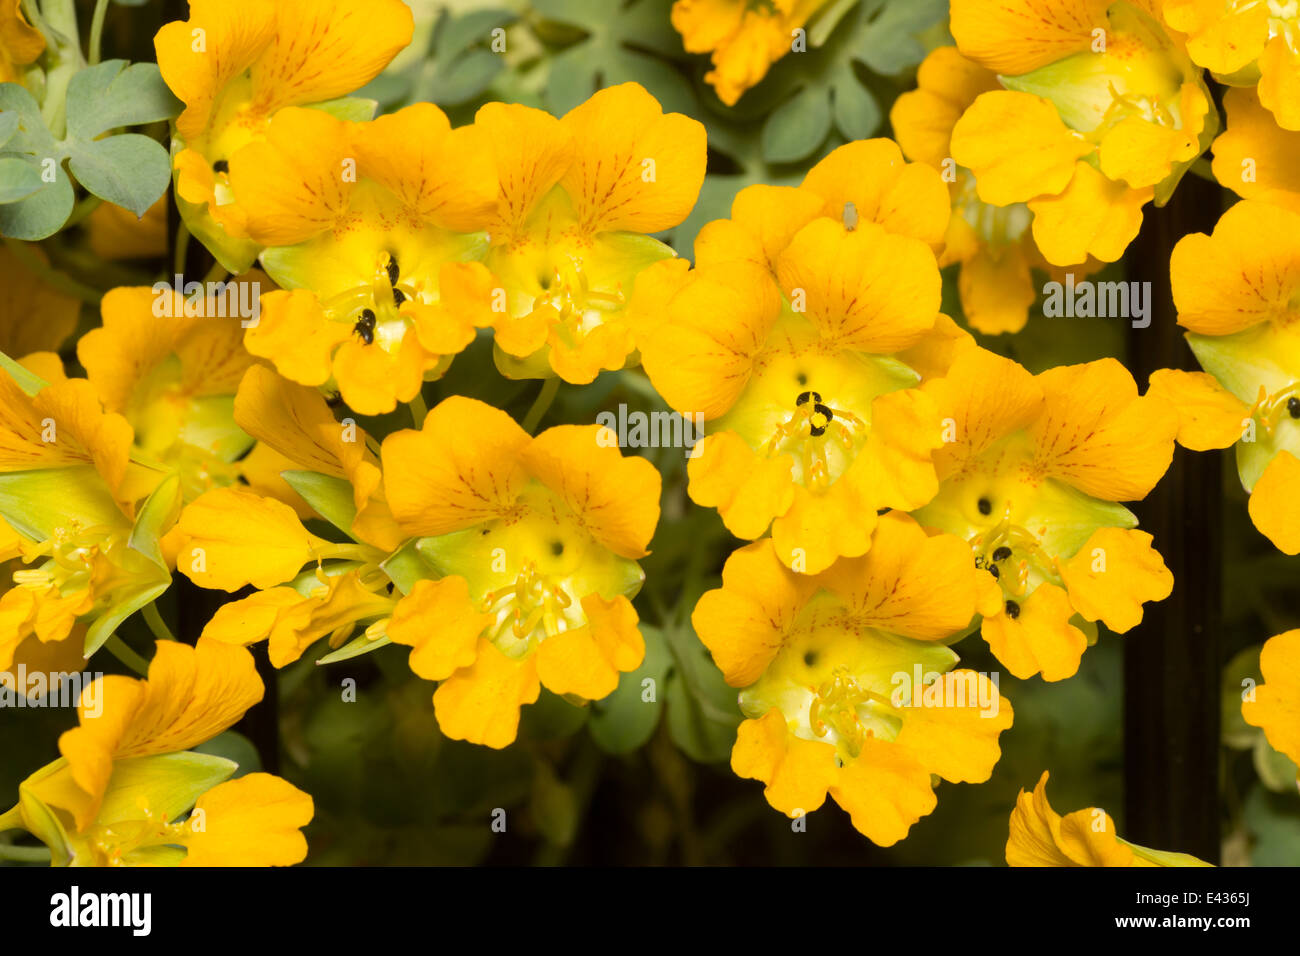 Flowers of the glaucous leaved perennial, Tropaeolum polyphyllum Stock Photo